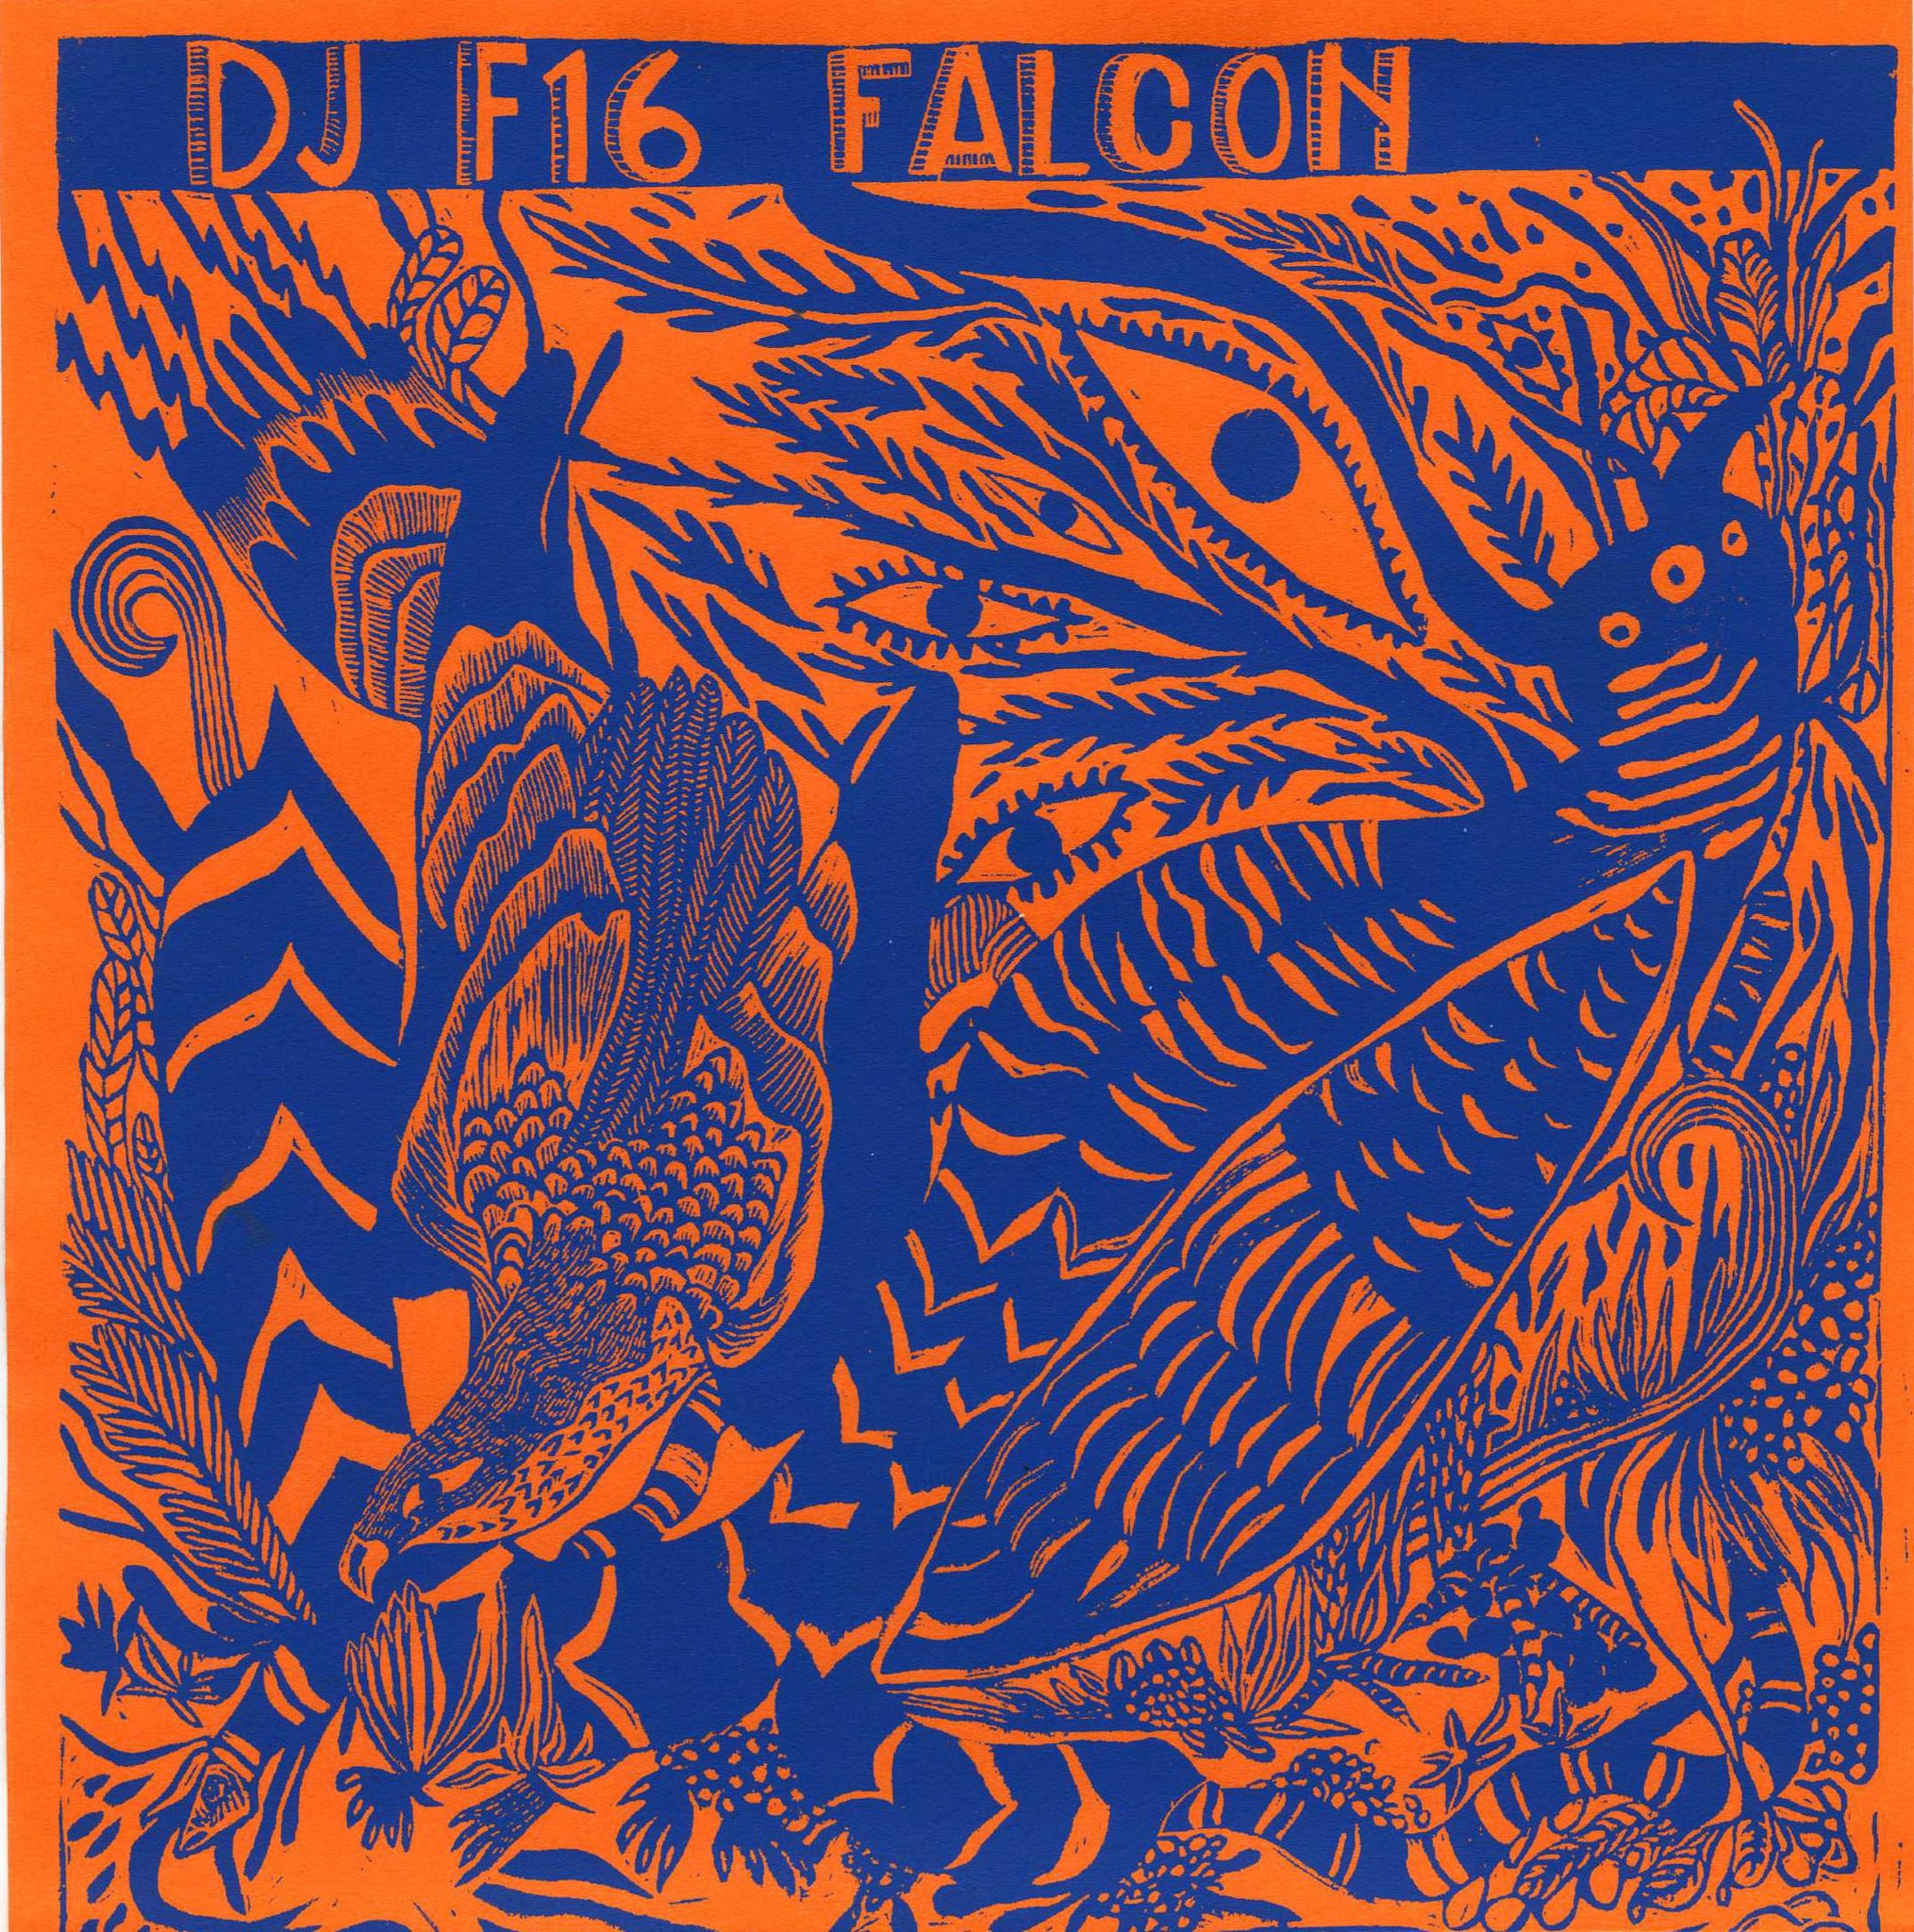 DJ F16 Falcon - Ici Commence La Nuit